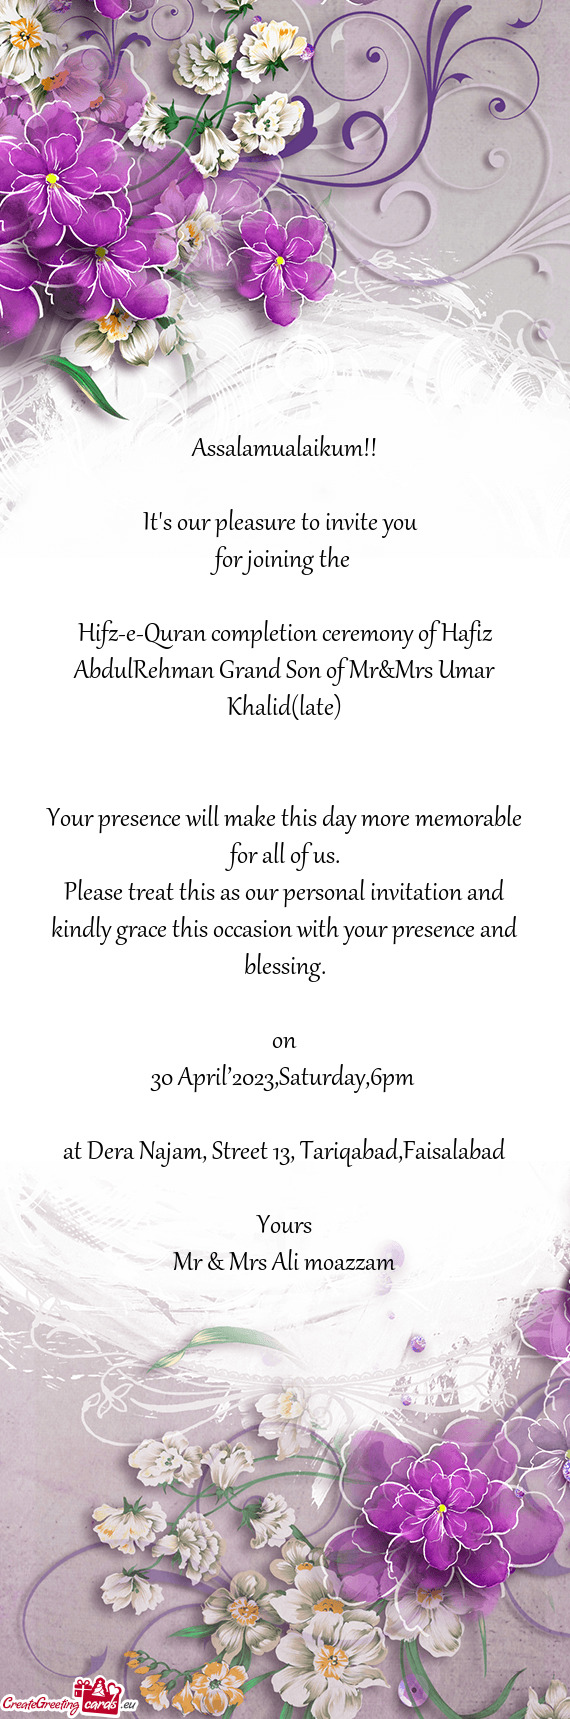 Hifz-e-Quran completion ceremony of Hafiz AbdulRehman Grand Son of Mr&Mrs Umar Khalid(late)